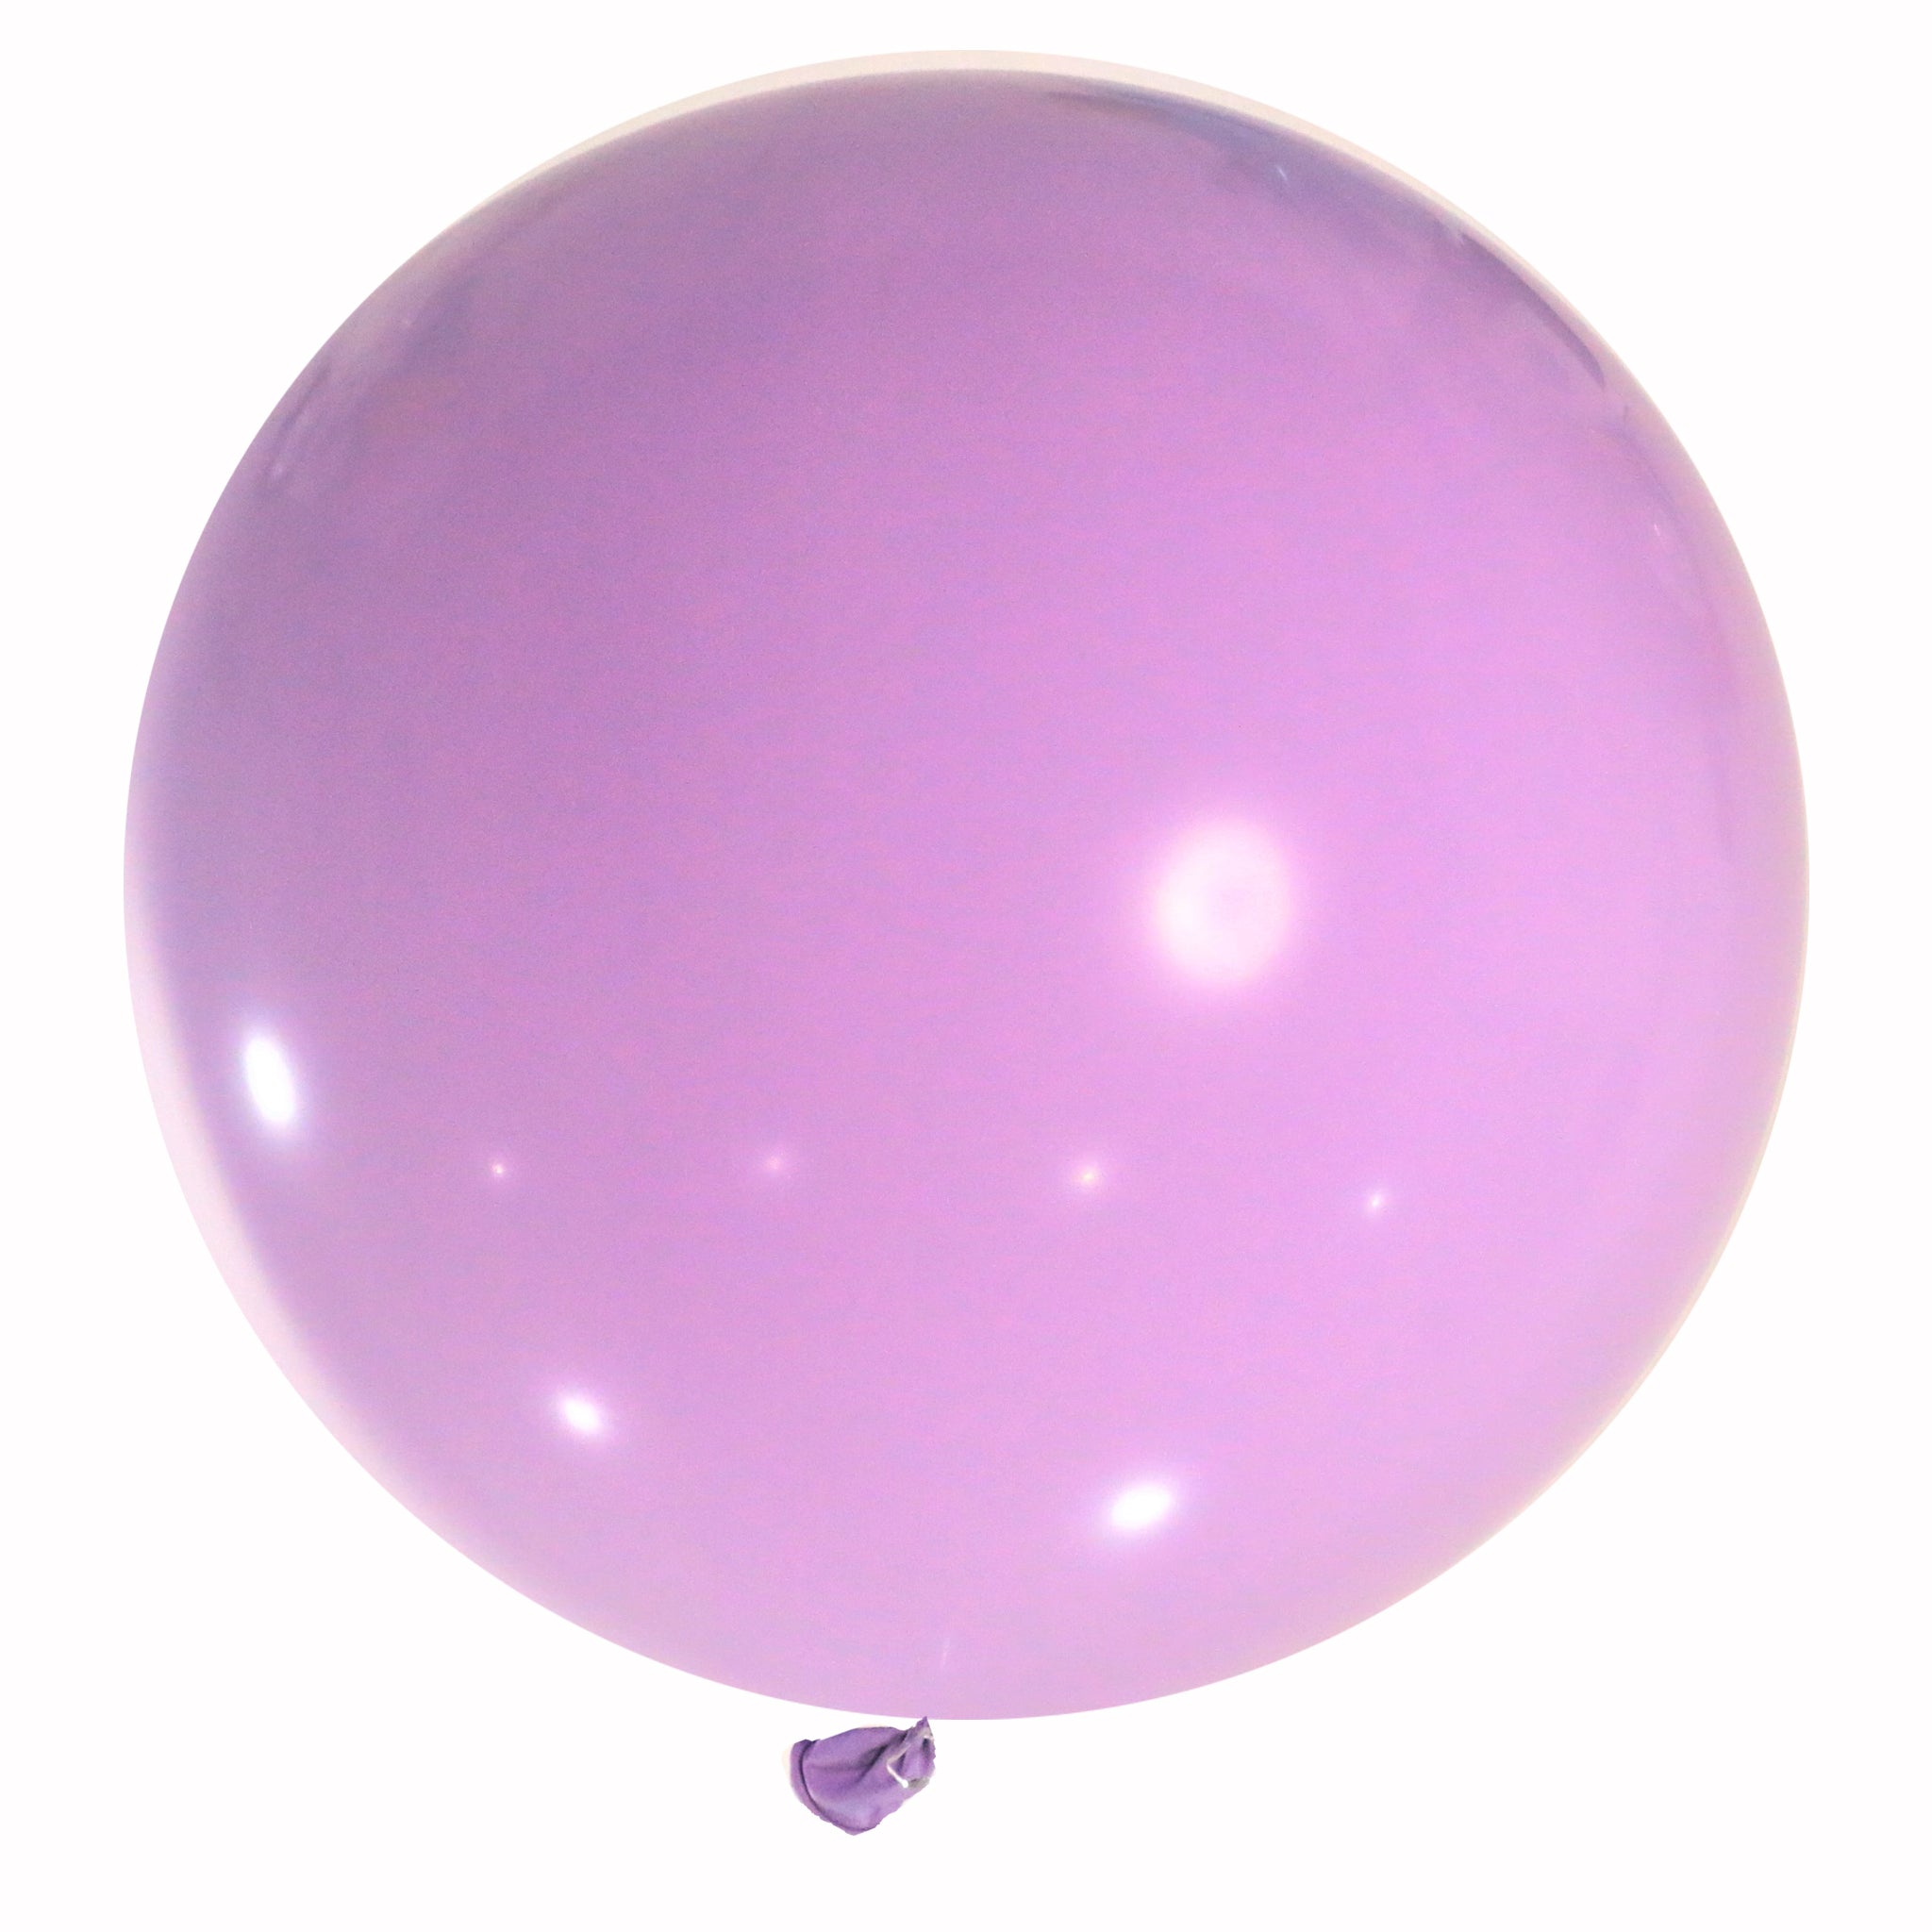 Purple 3 Feet Latex Balloon for sale online in Dubai